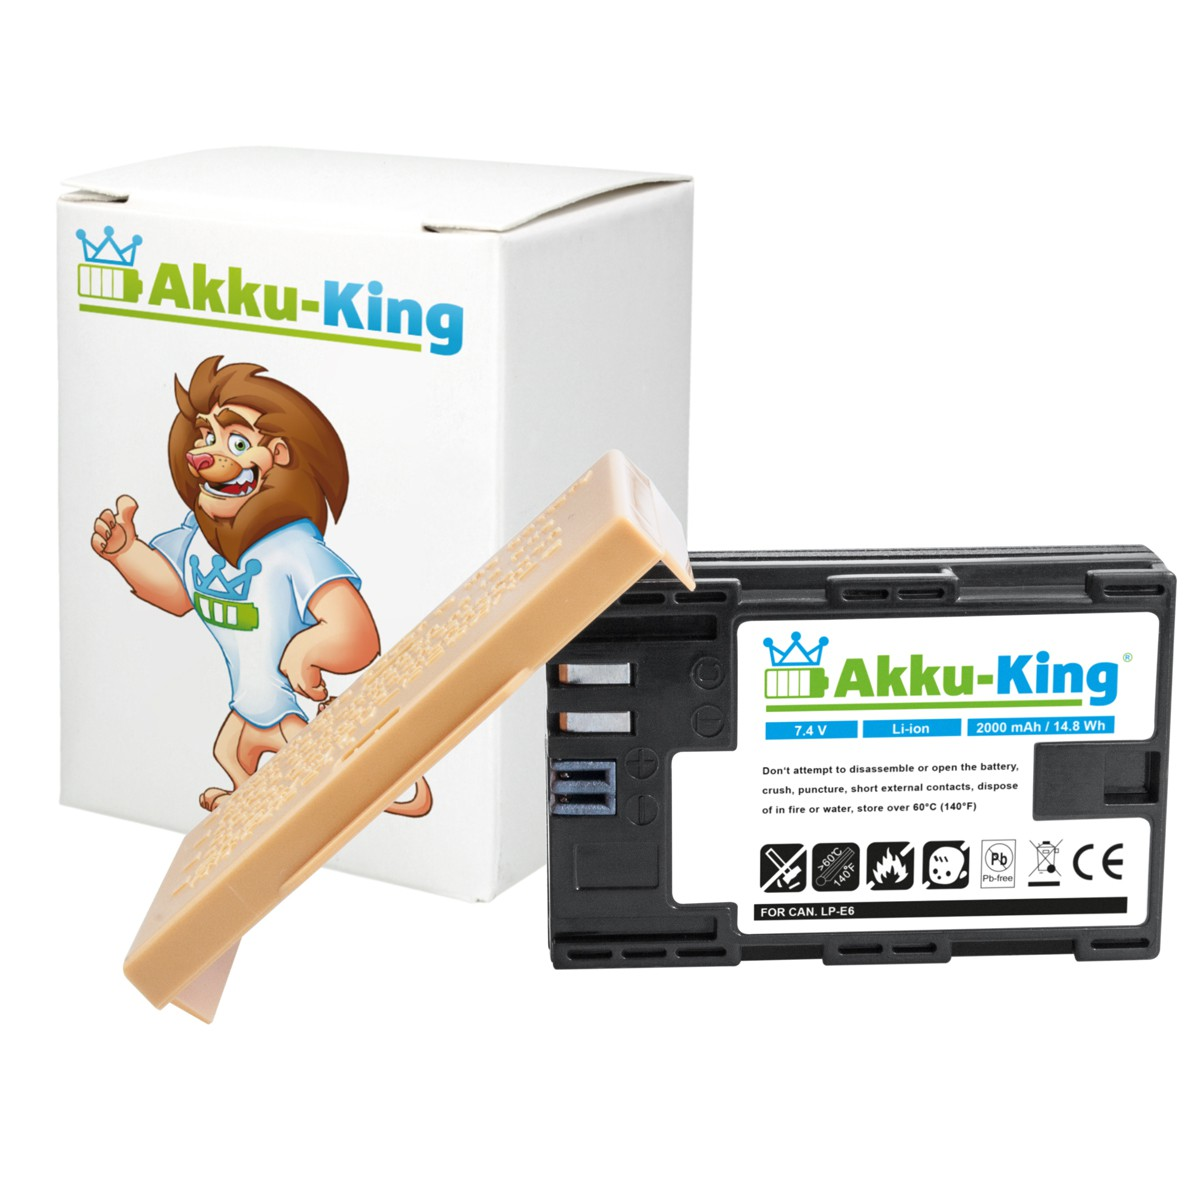 AKKU-KING Akku Volt, kompatibel 2000mAh LP-E6 mit Li-Ion Canon Kamera-Akku, 7.4